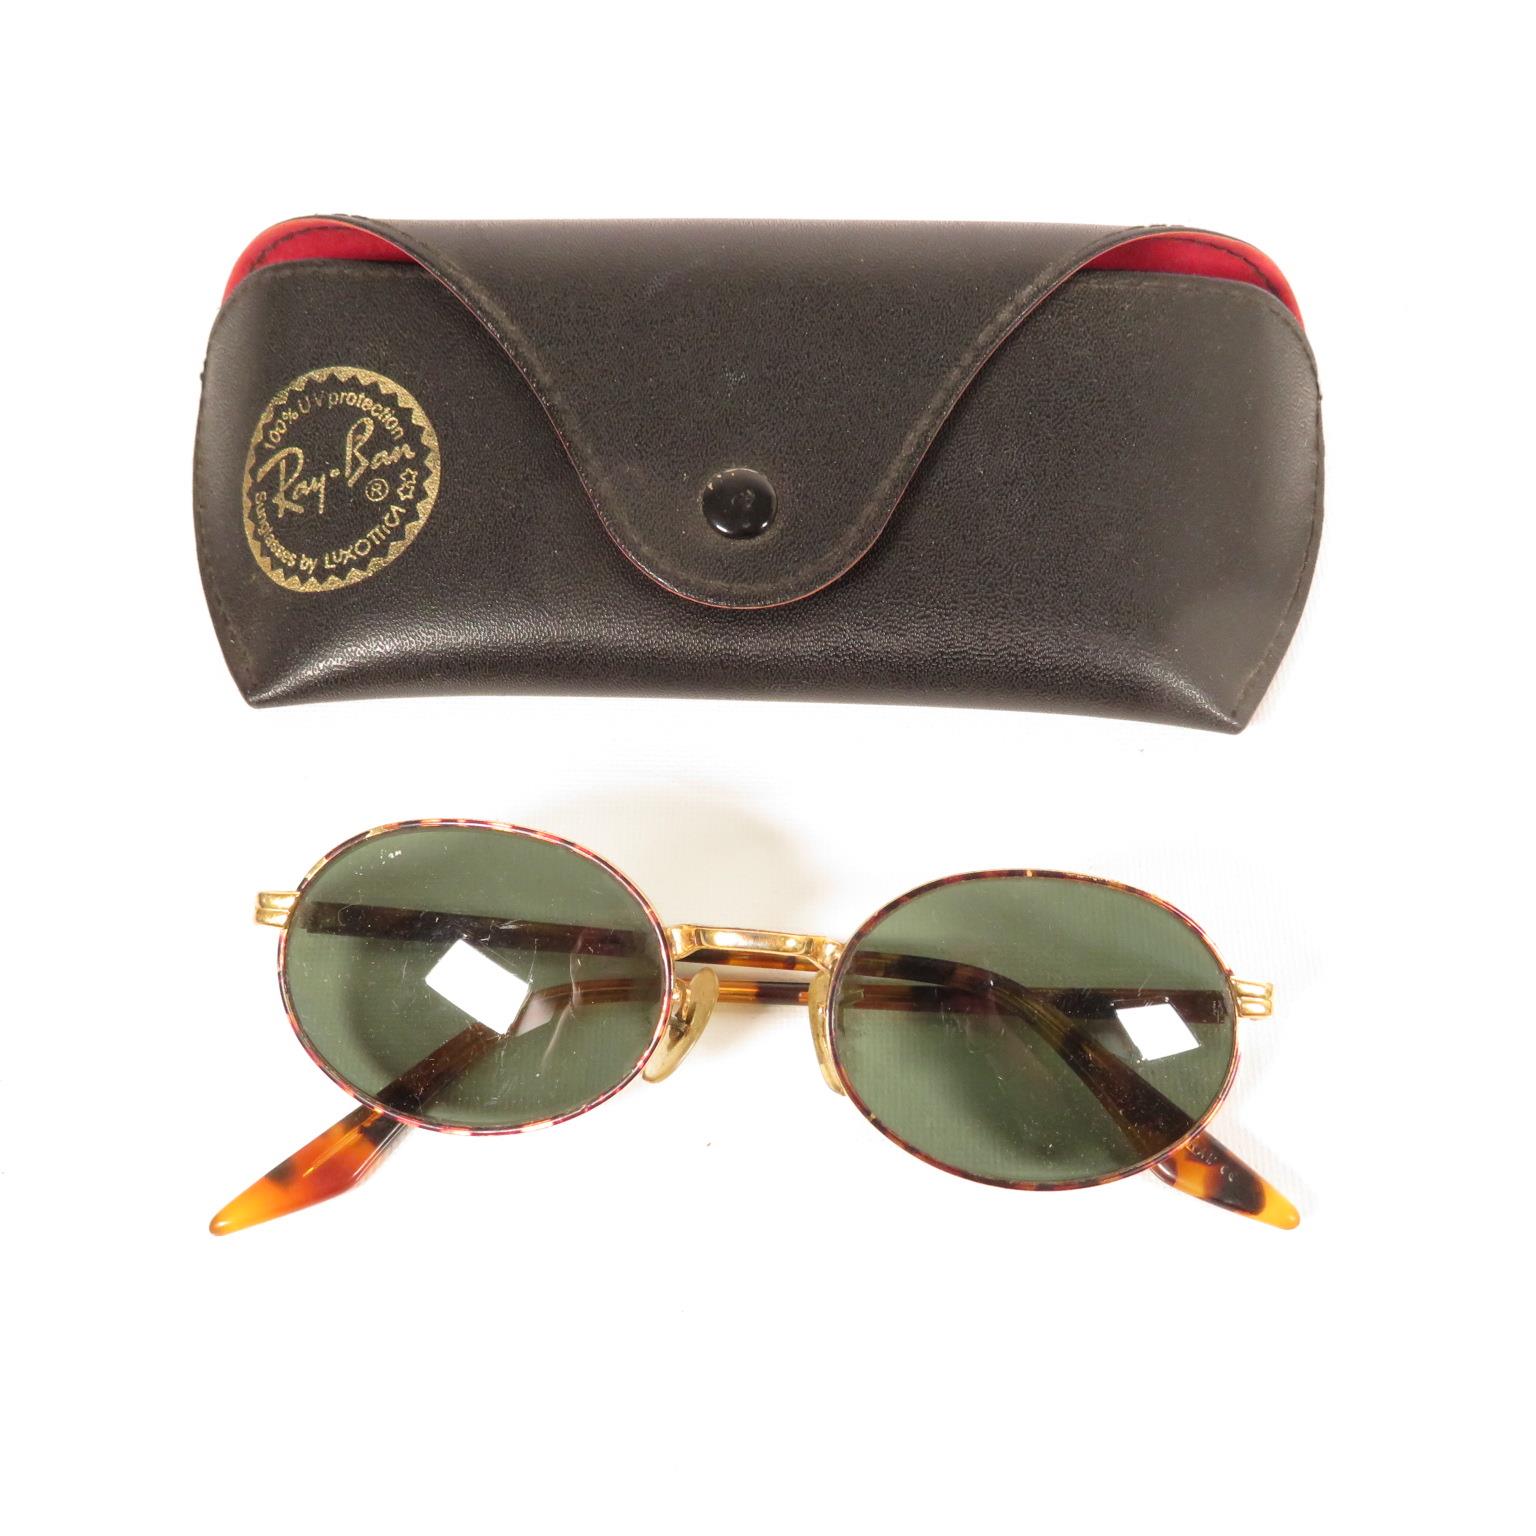 5x pairs Ray Ban sunglasses - - Image 6 of 24